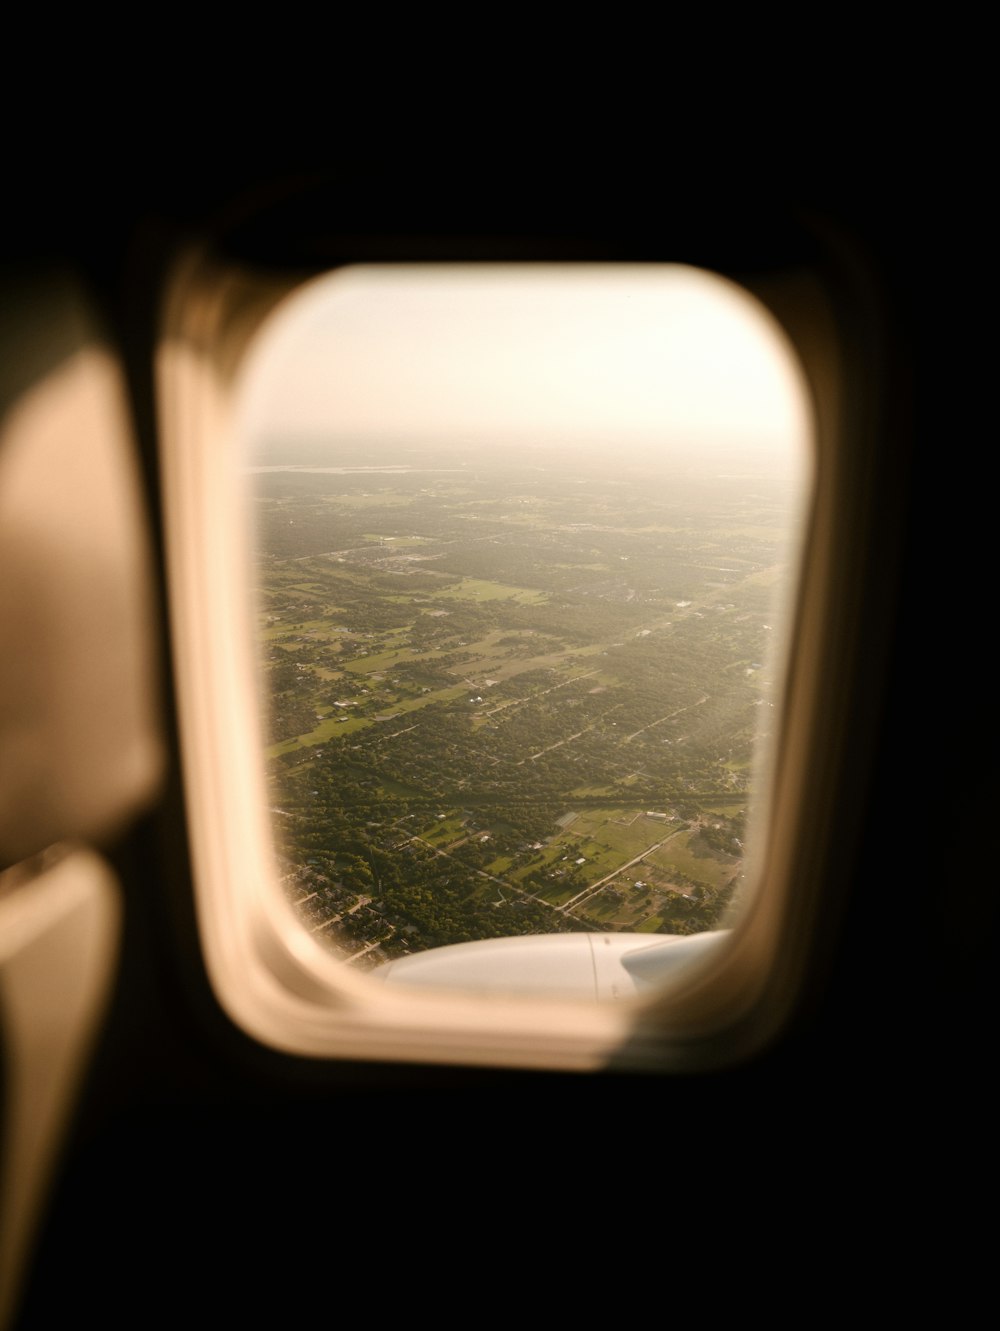 janela retangular do avião